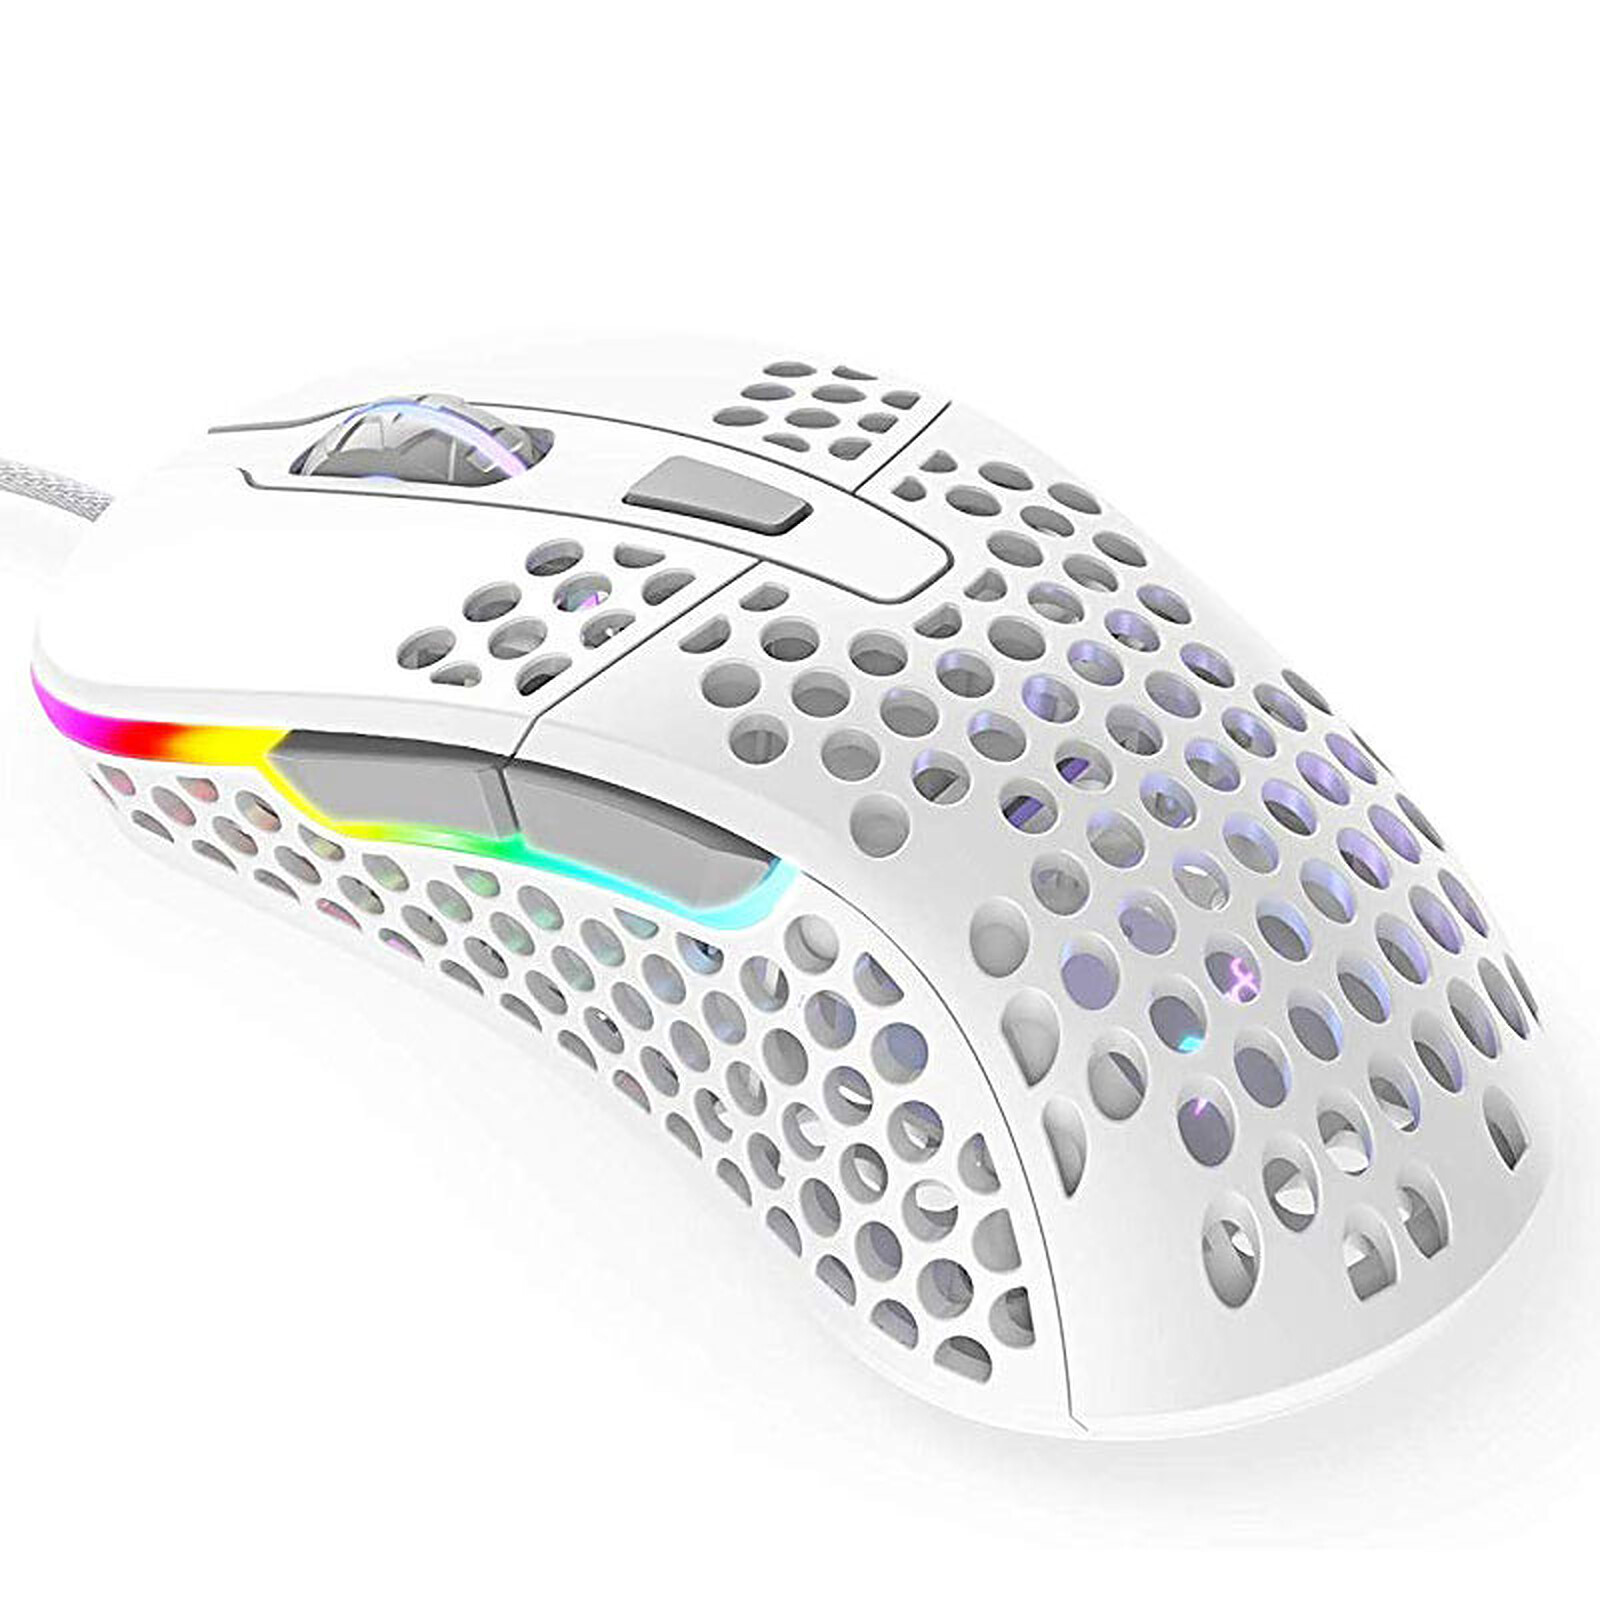 Xtrfy M4 Rgb White Mouse Xtrfy On Ldlc